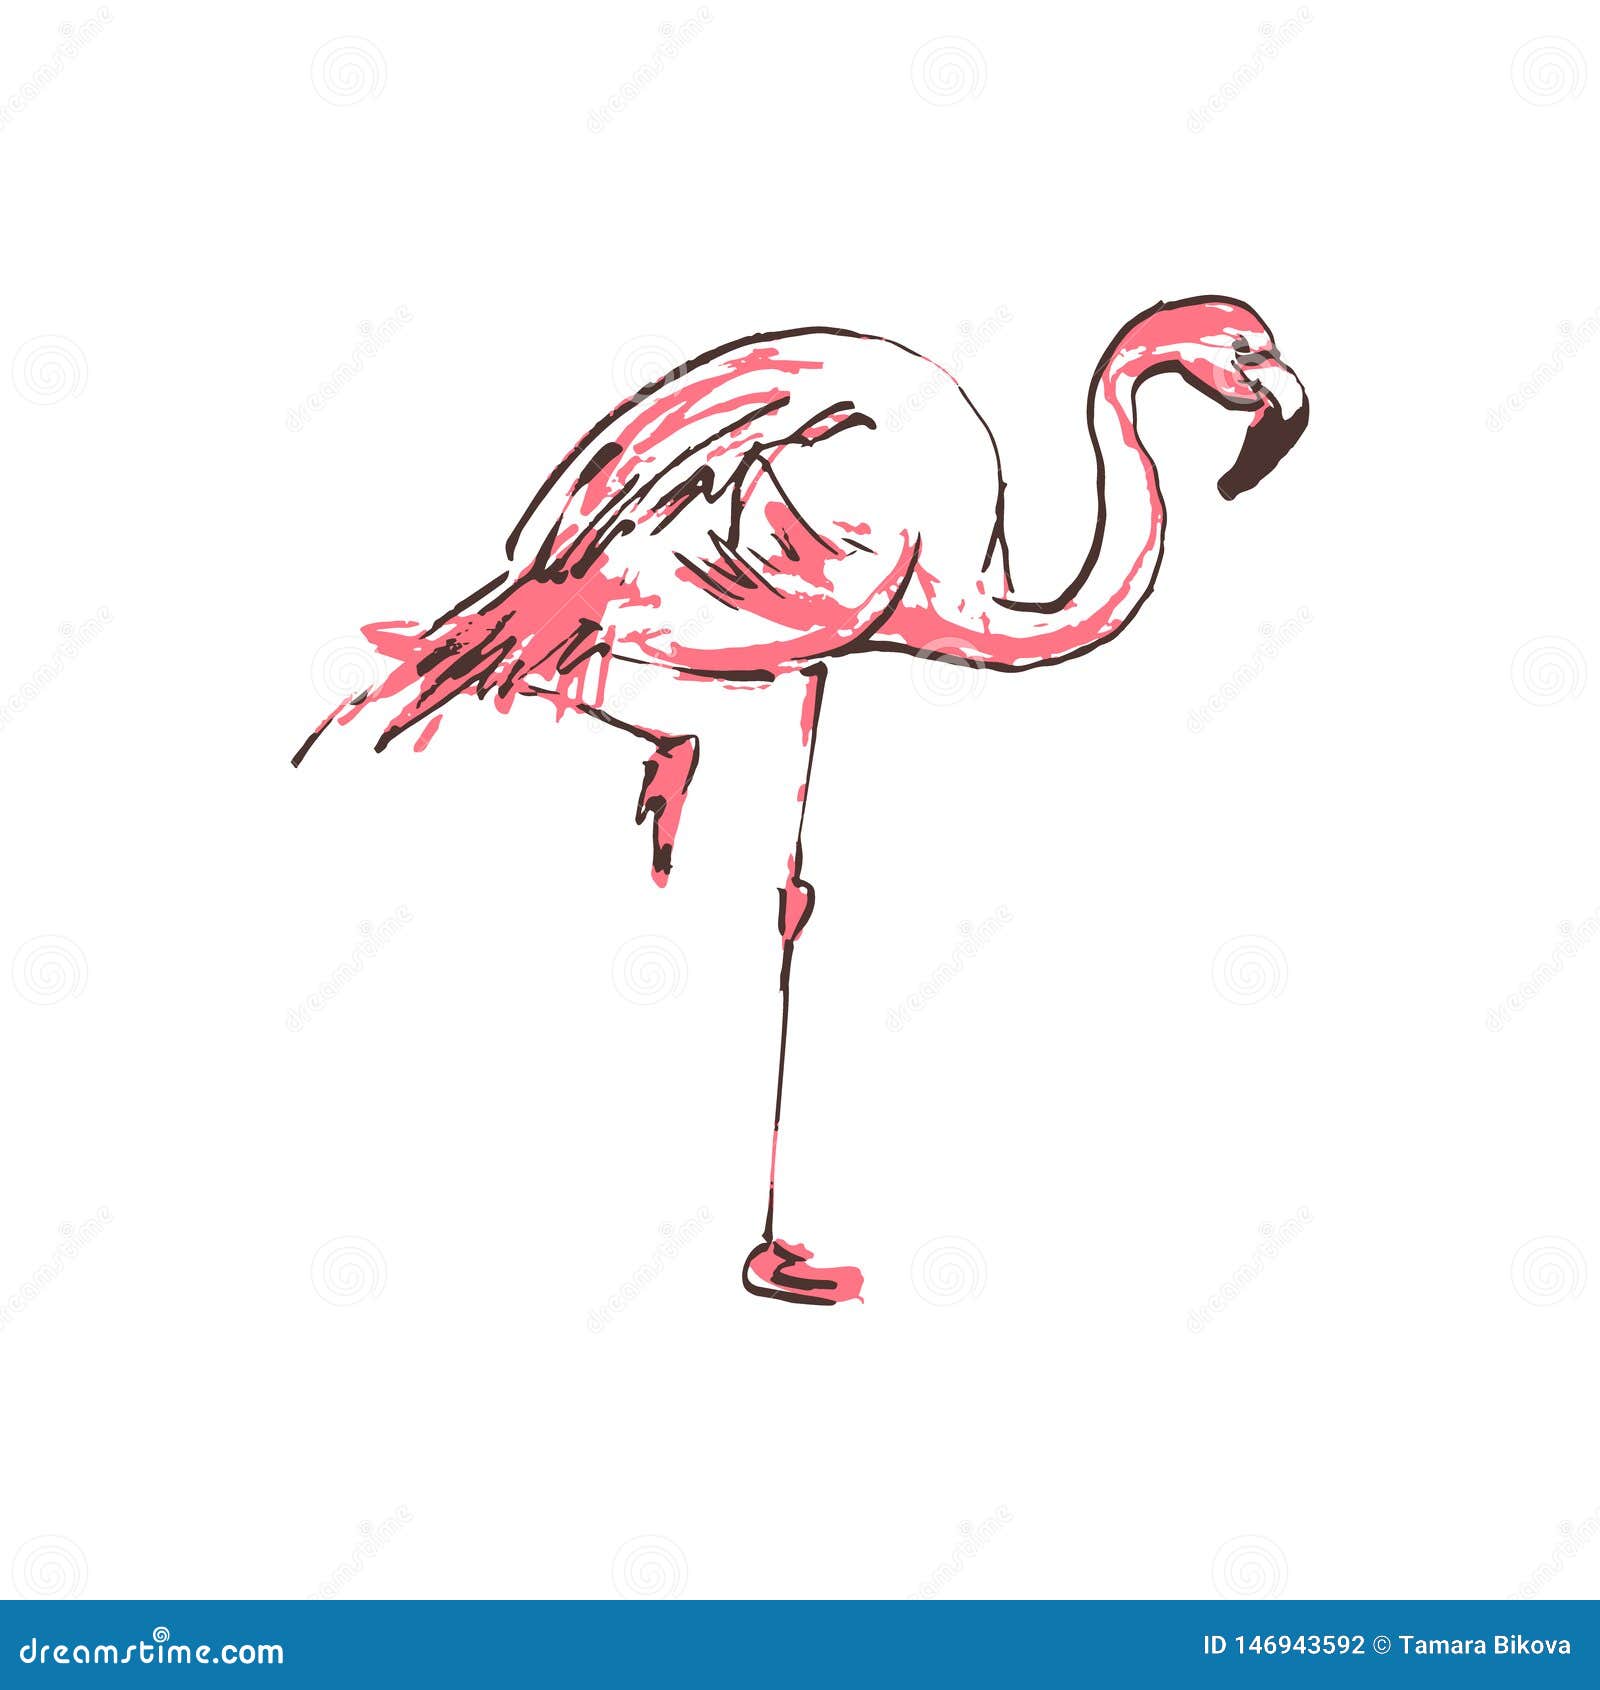 Vögel, Schwan, Ente, Sparrow, Flamingo, Bru,: Stockillustration